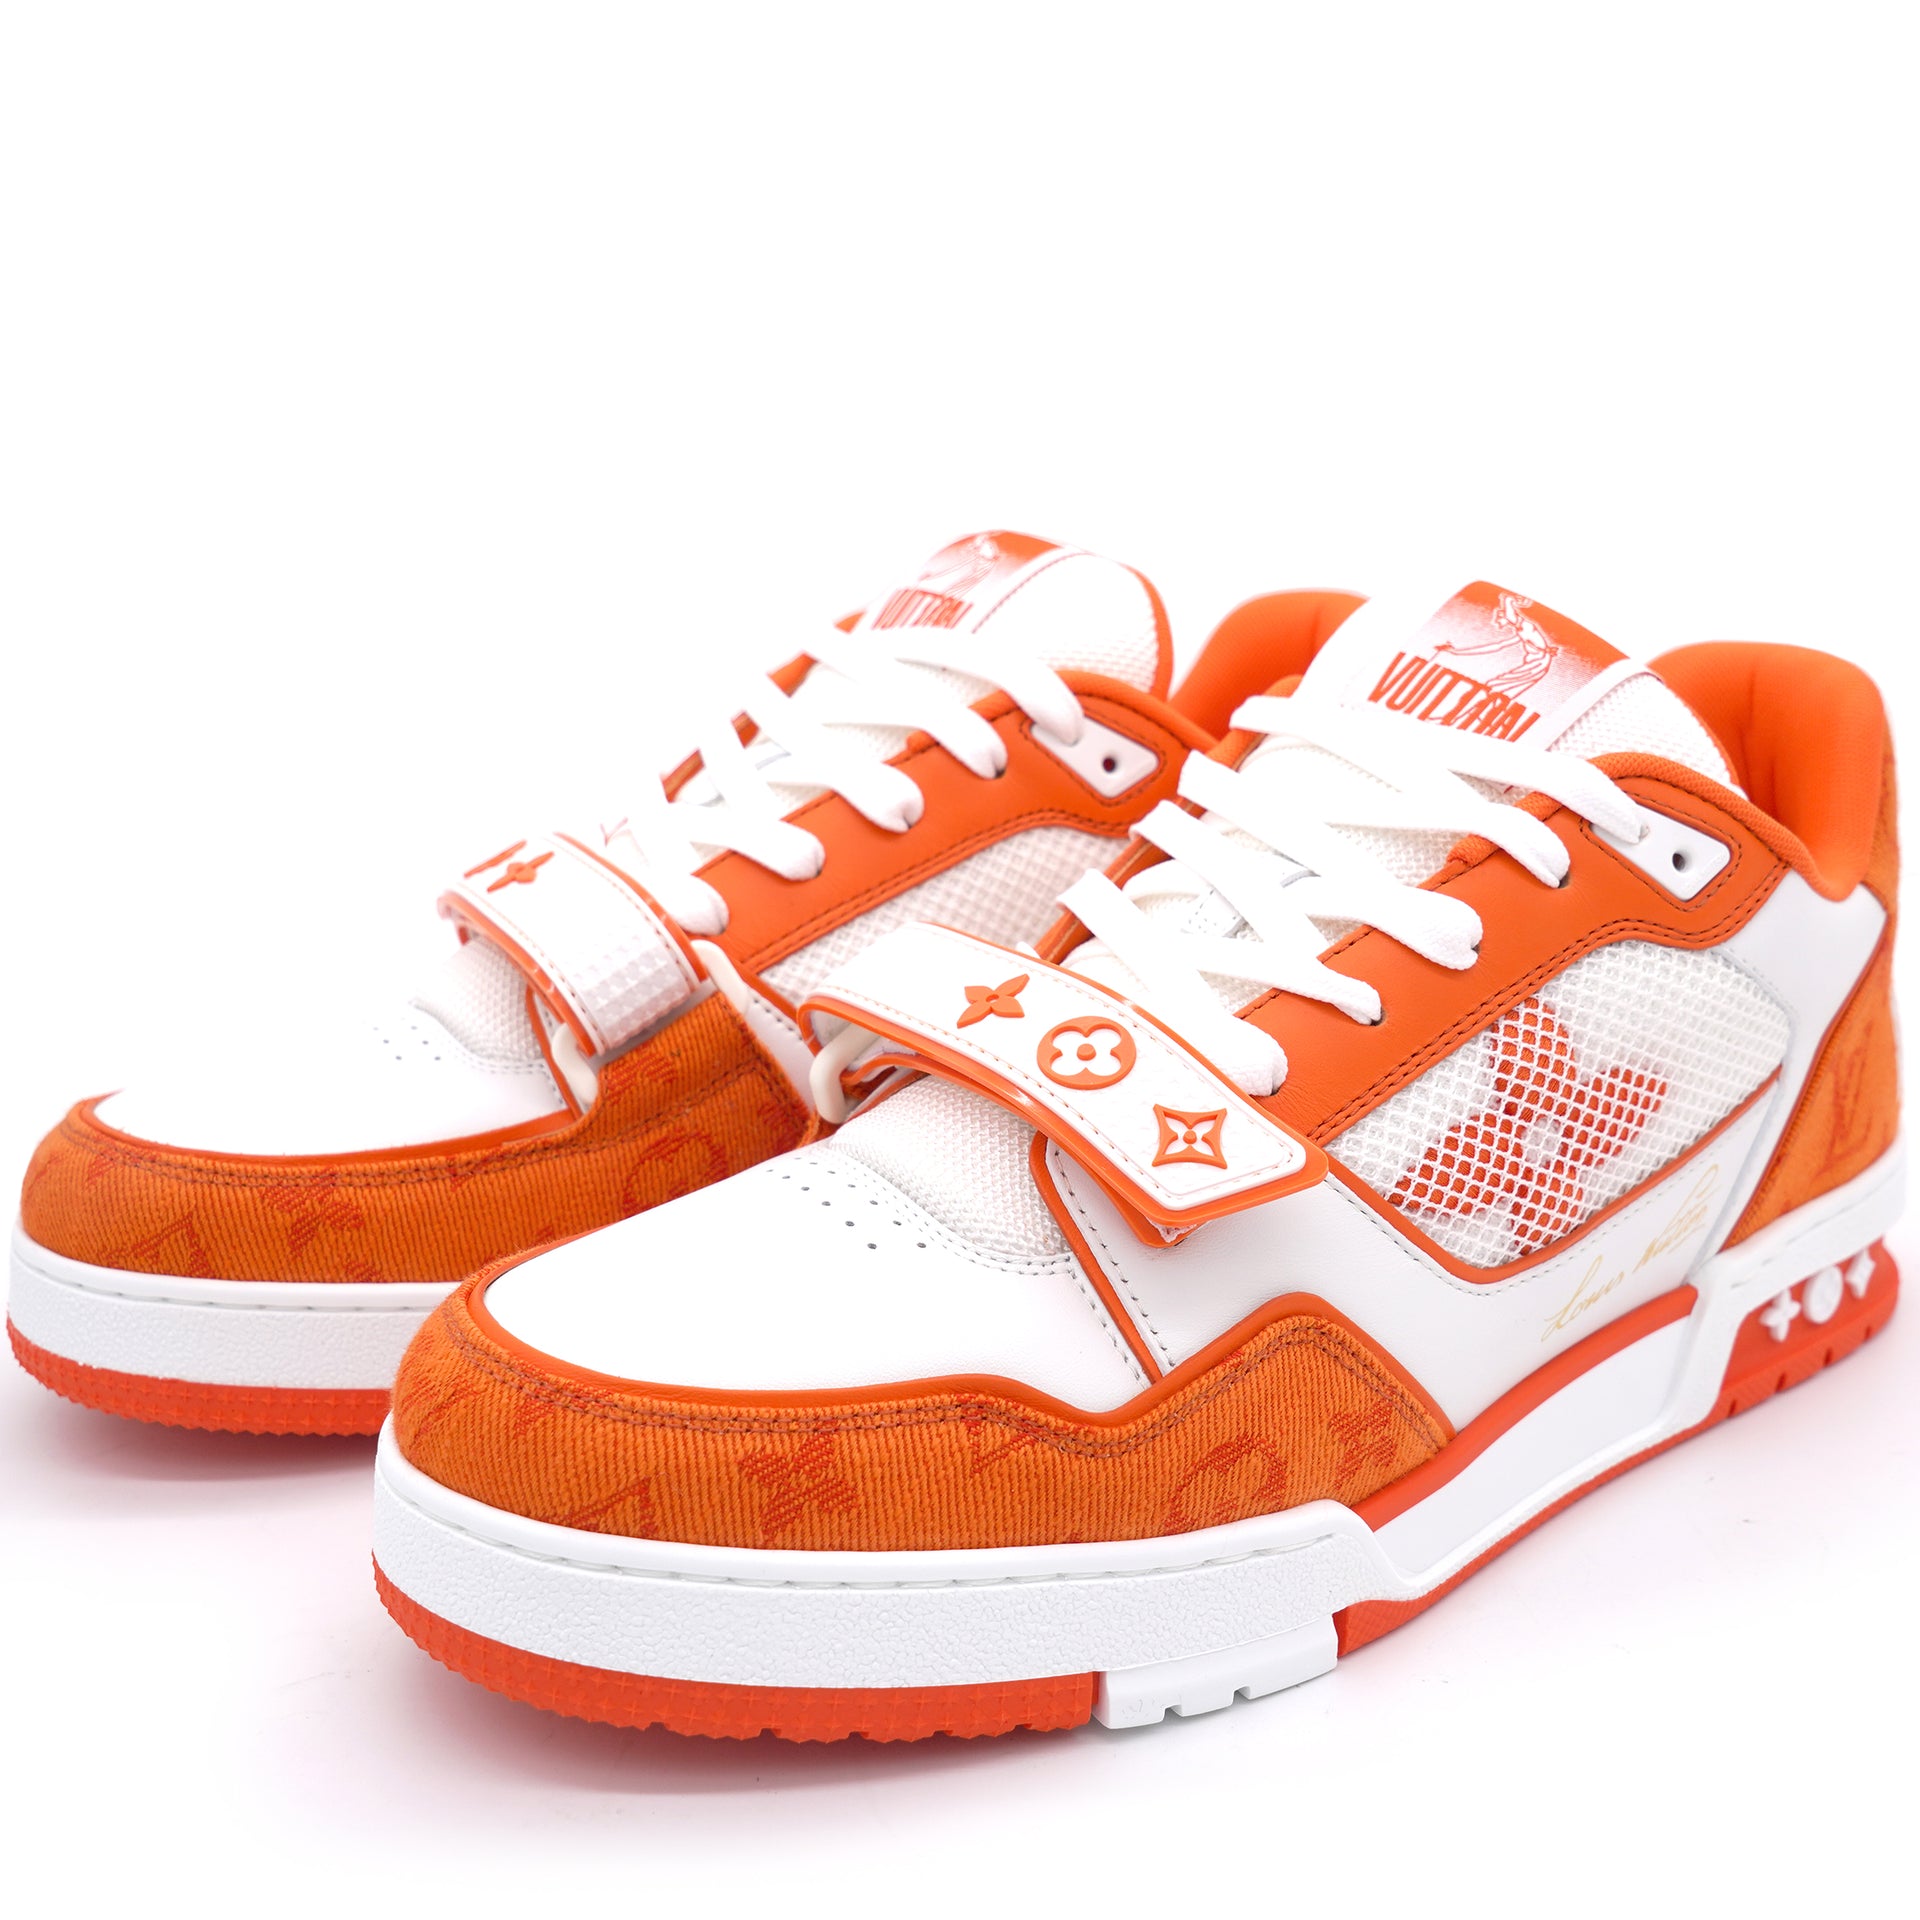 louis vuitton orange sneaker